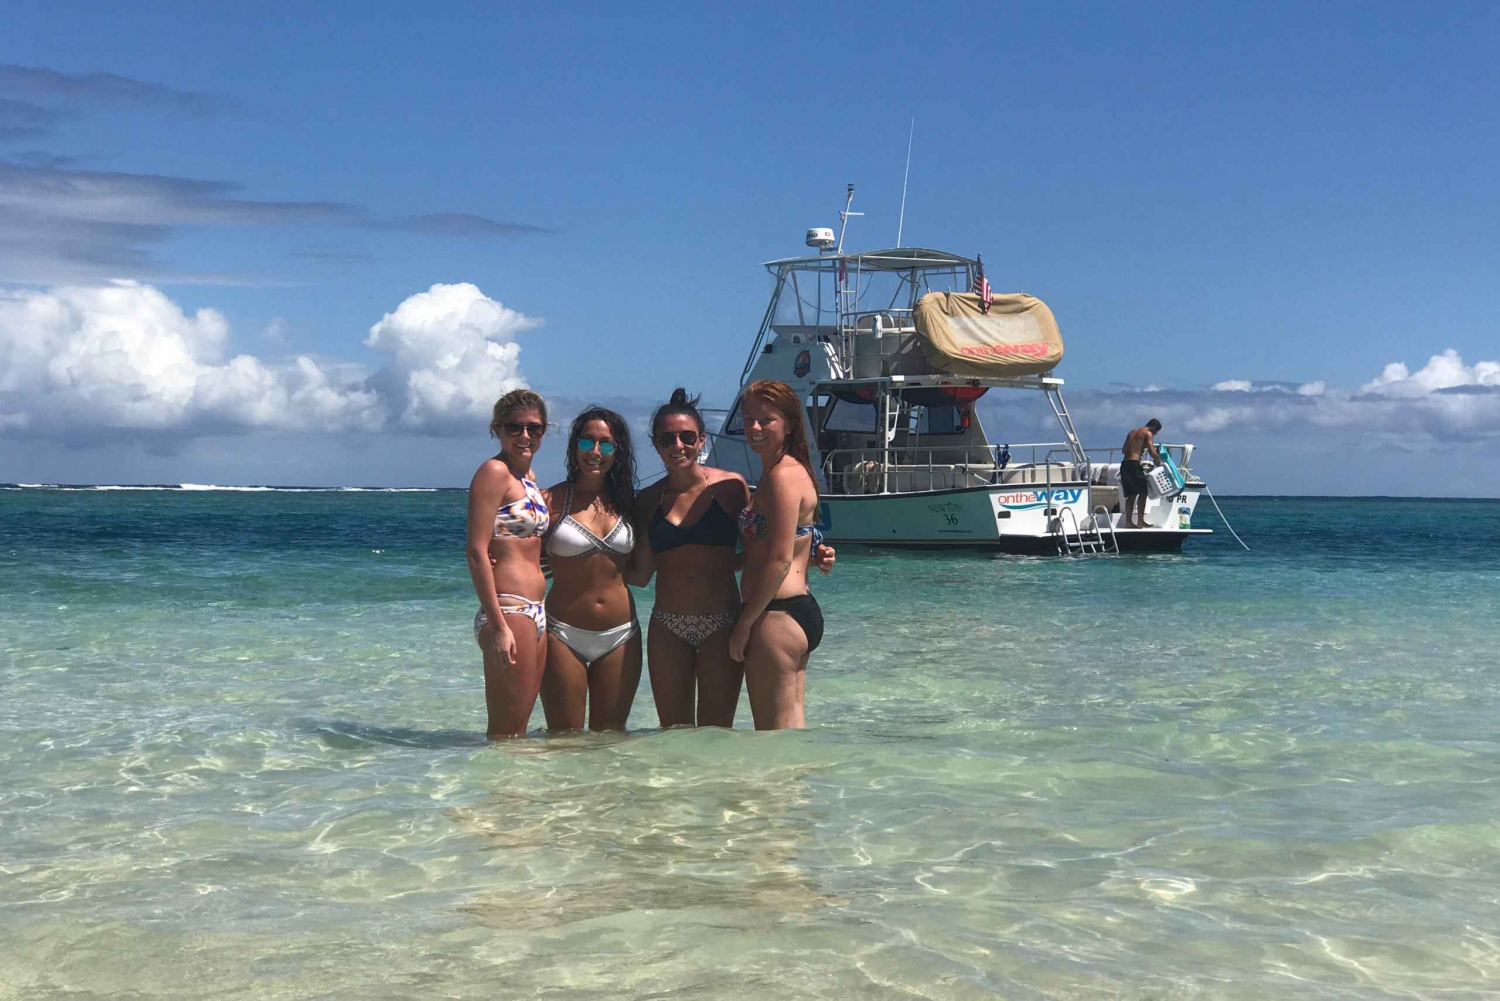 Fajardo: Culebra Boat Trip with Snorkeling, Lunch and Drinks